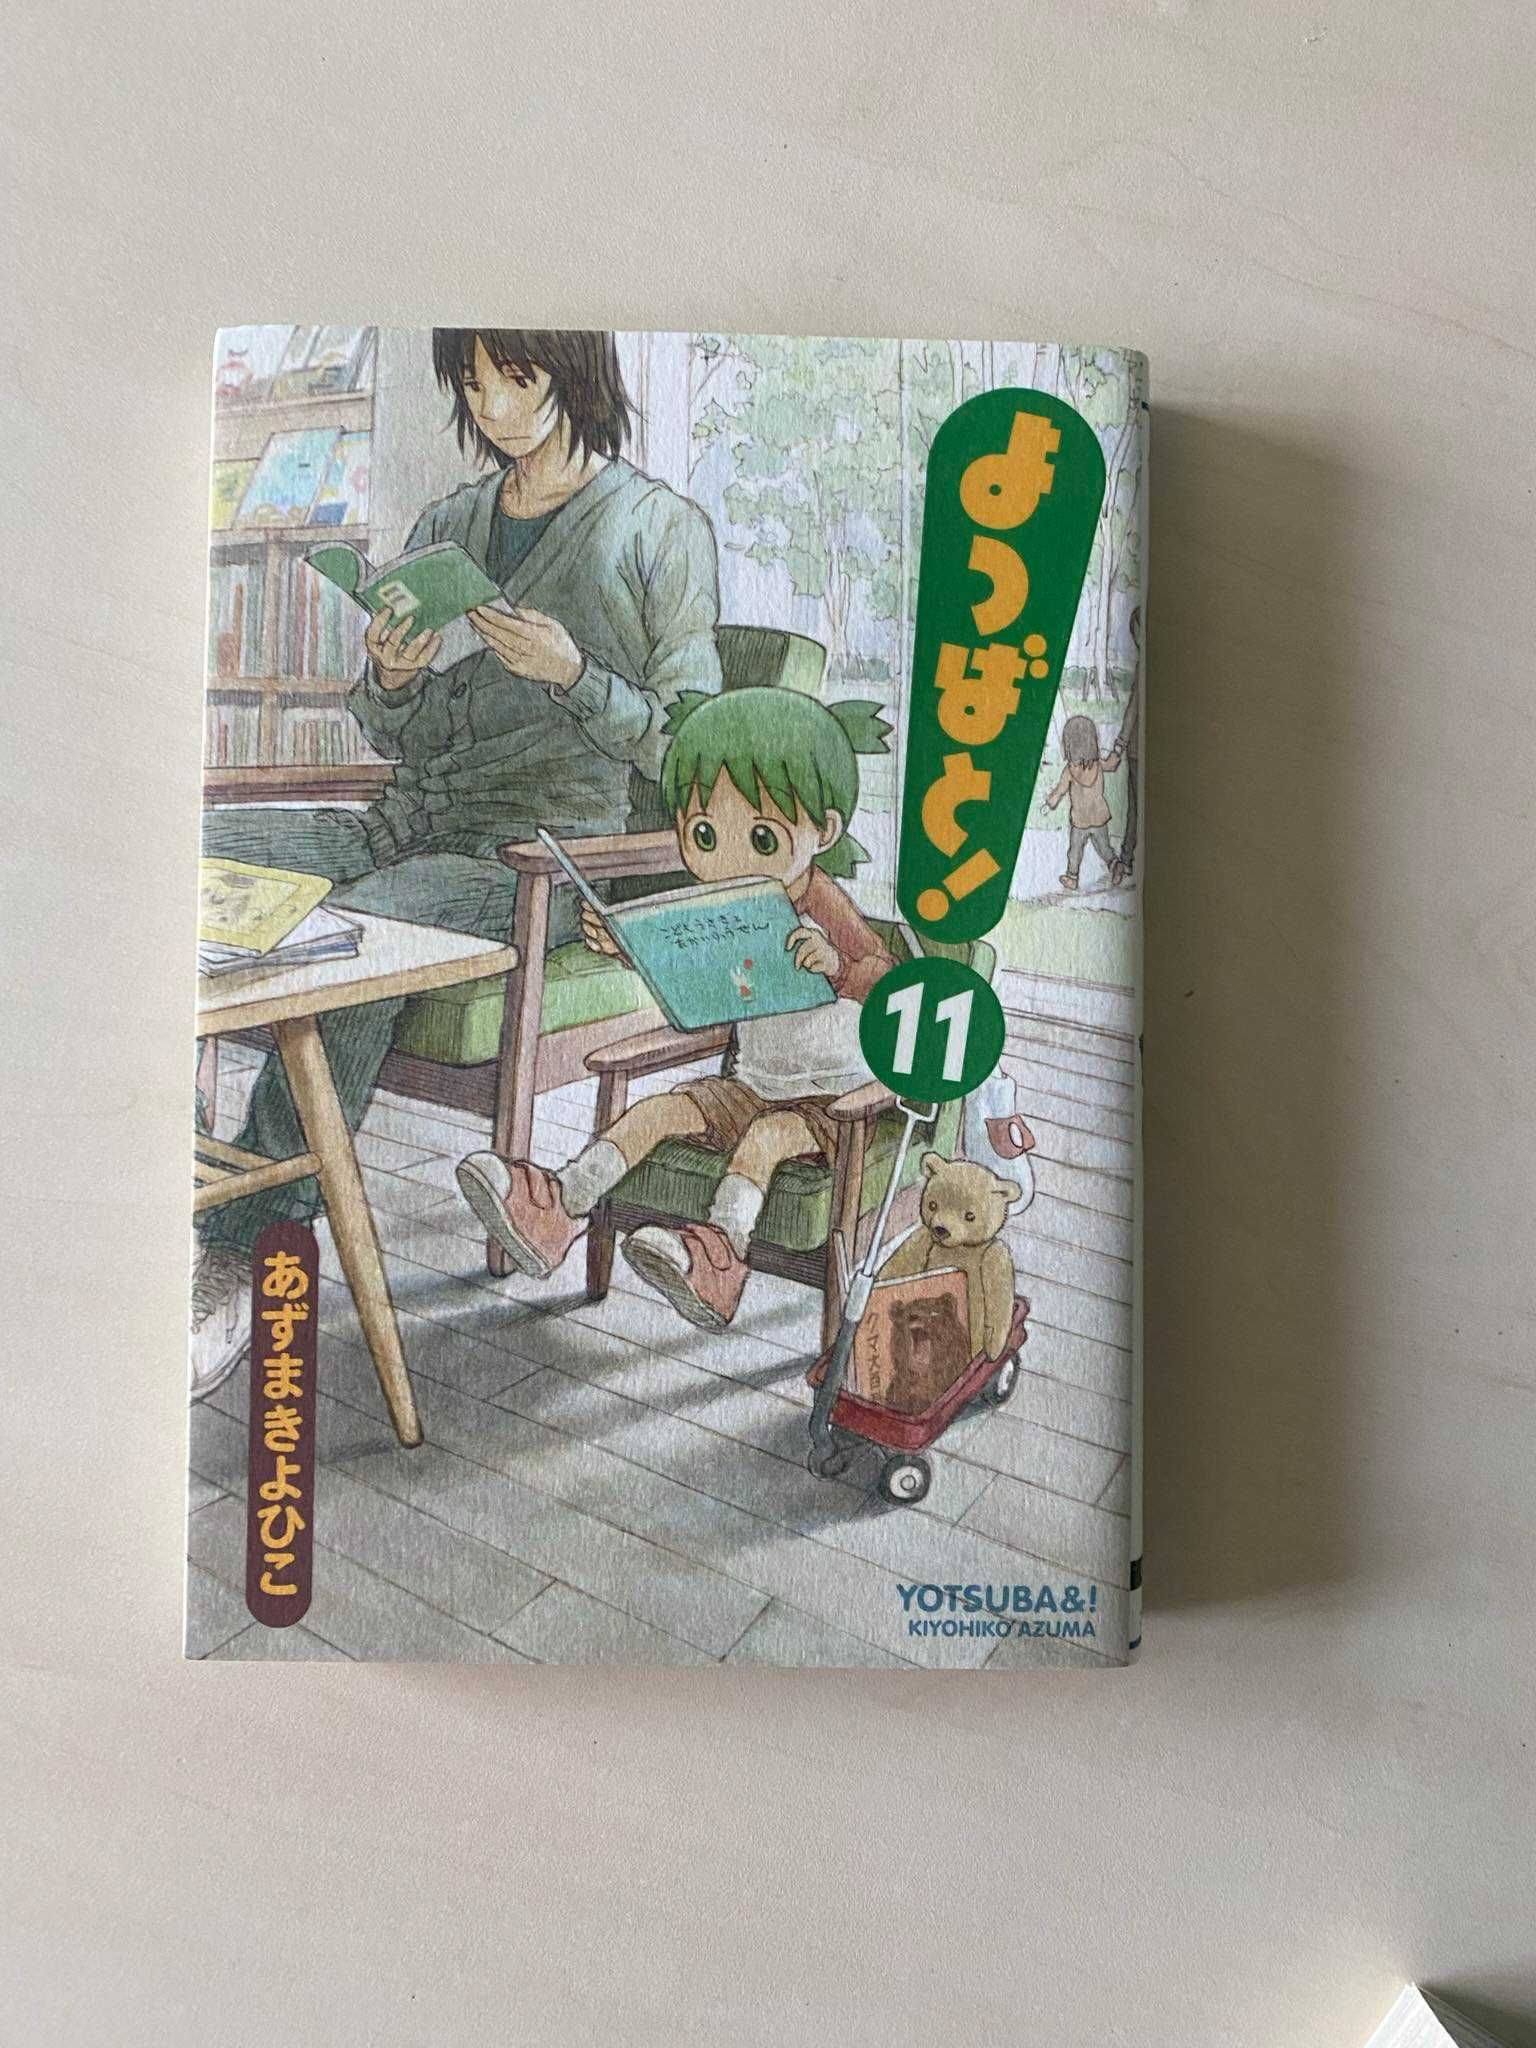 Manga Yotsuba! TOM/VOL 1-15 po japońsku/in japanese